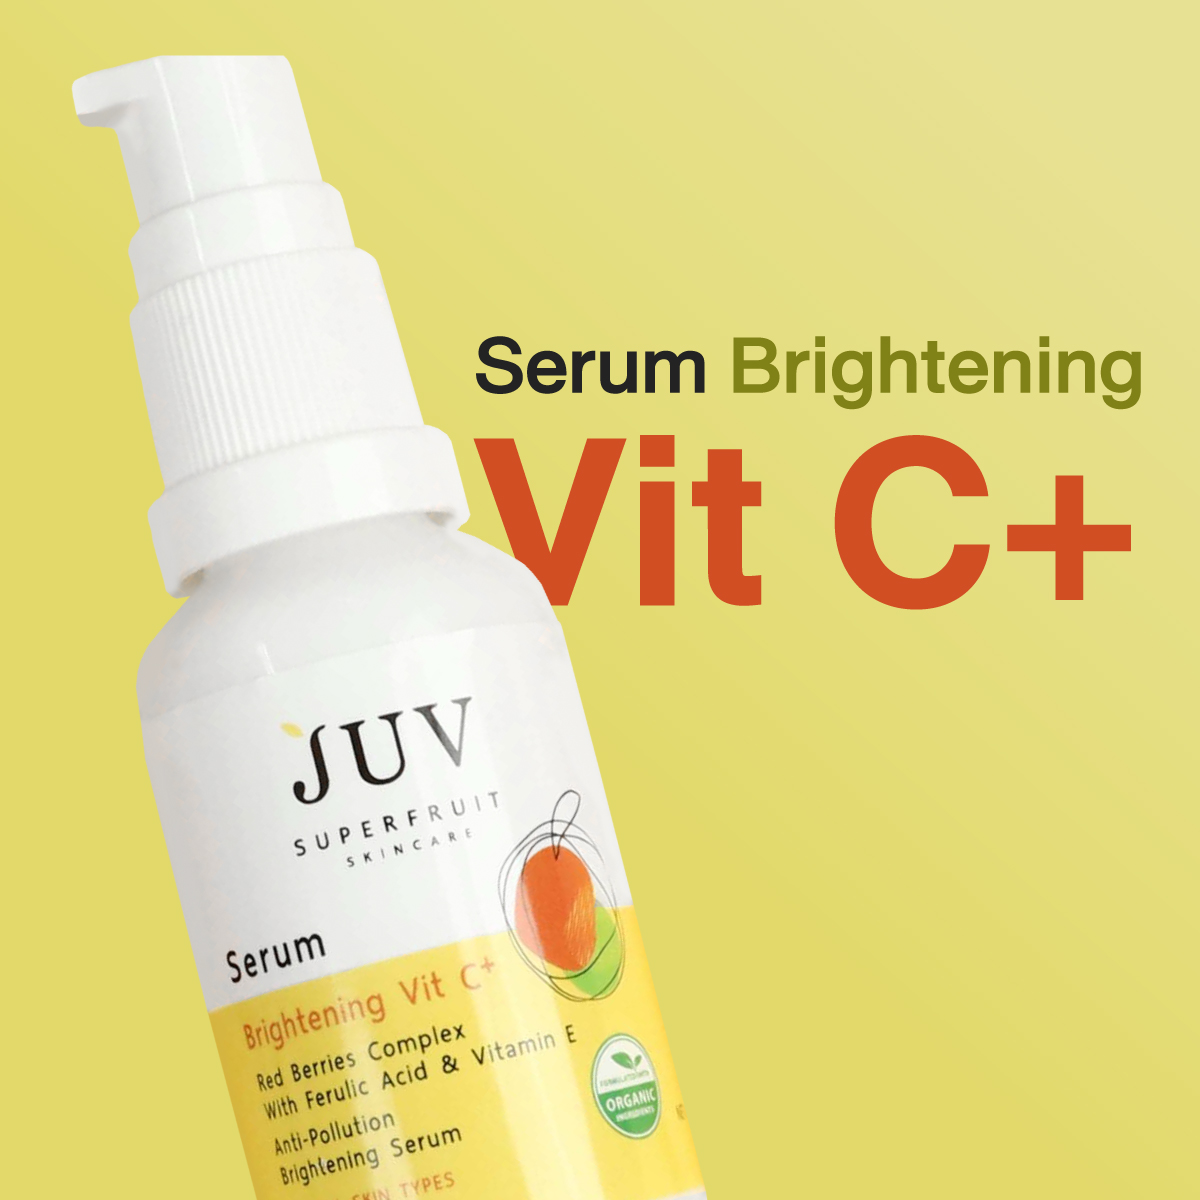 JUV Serum Brightening Vit C+